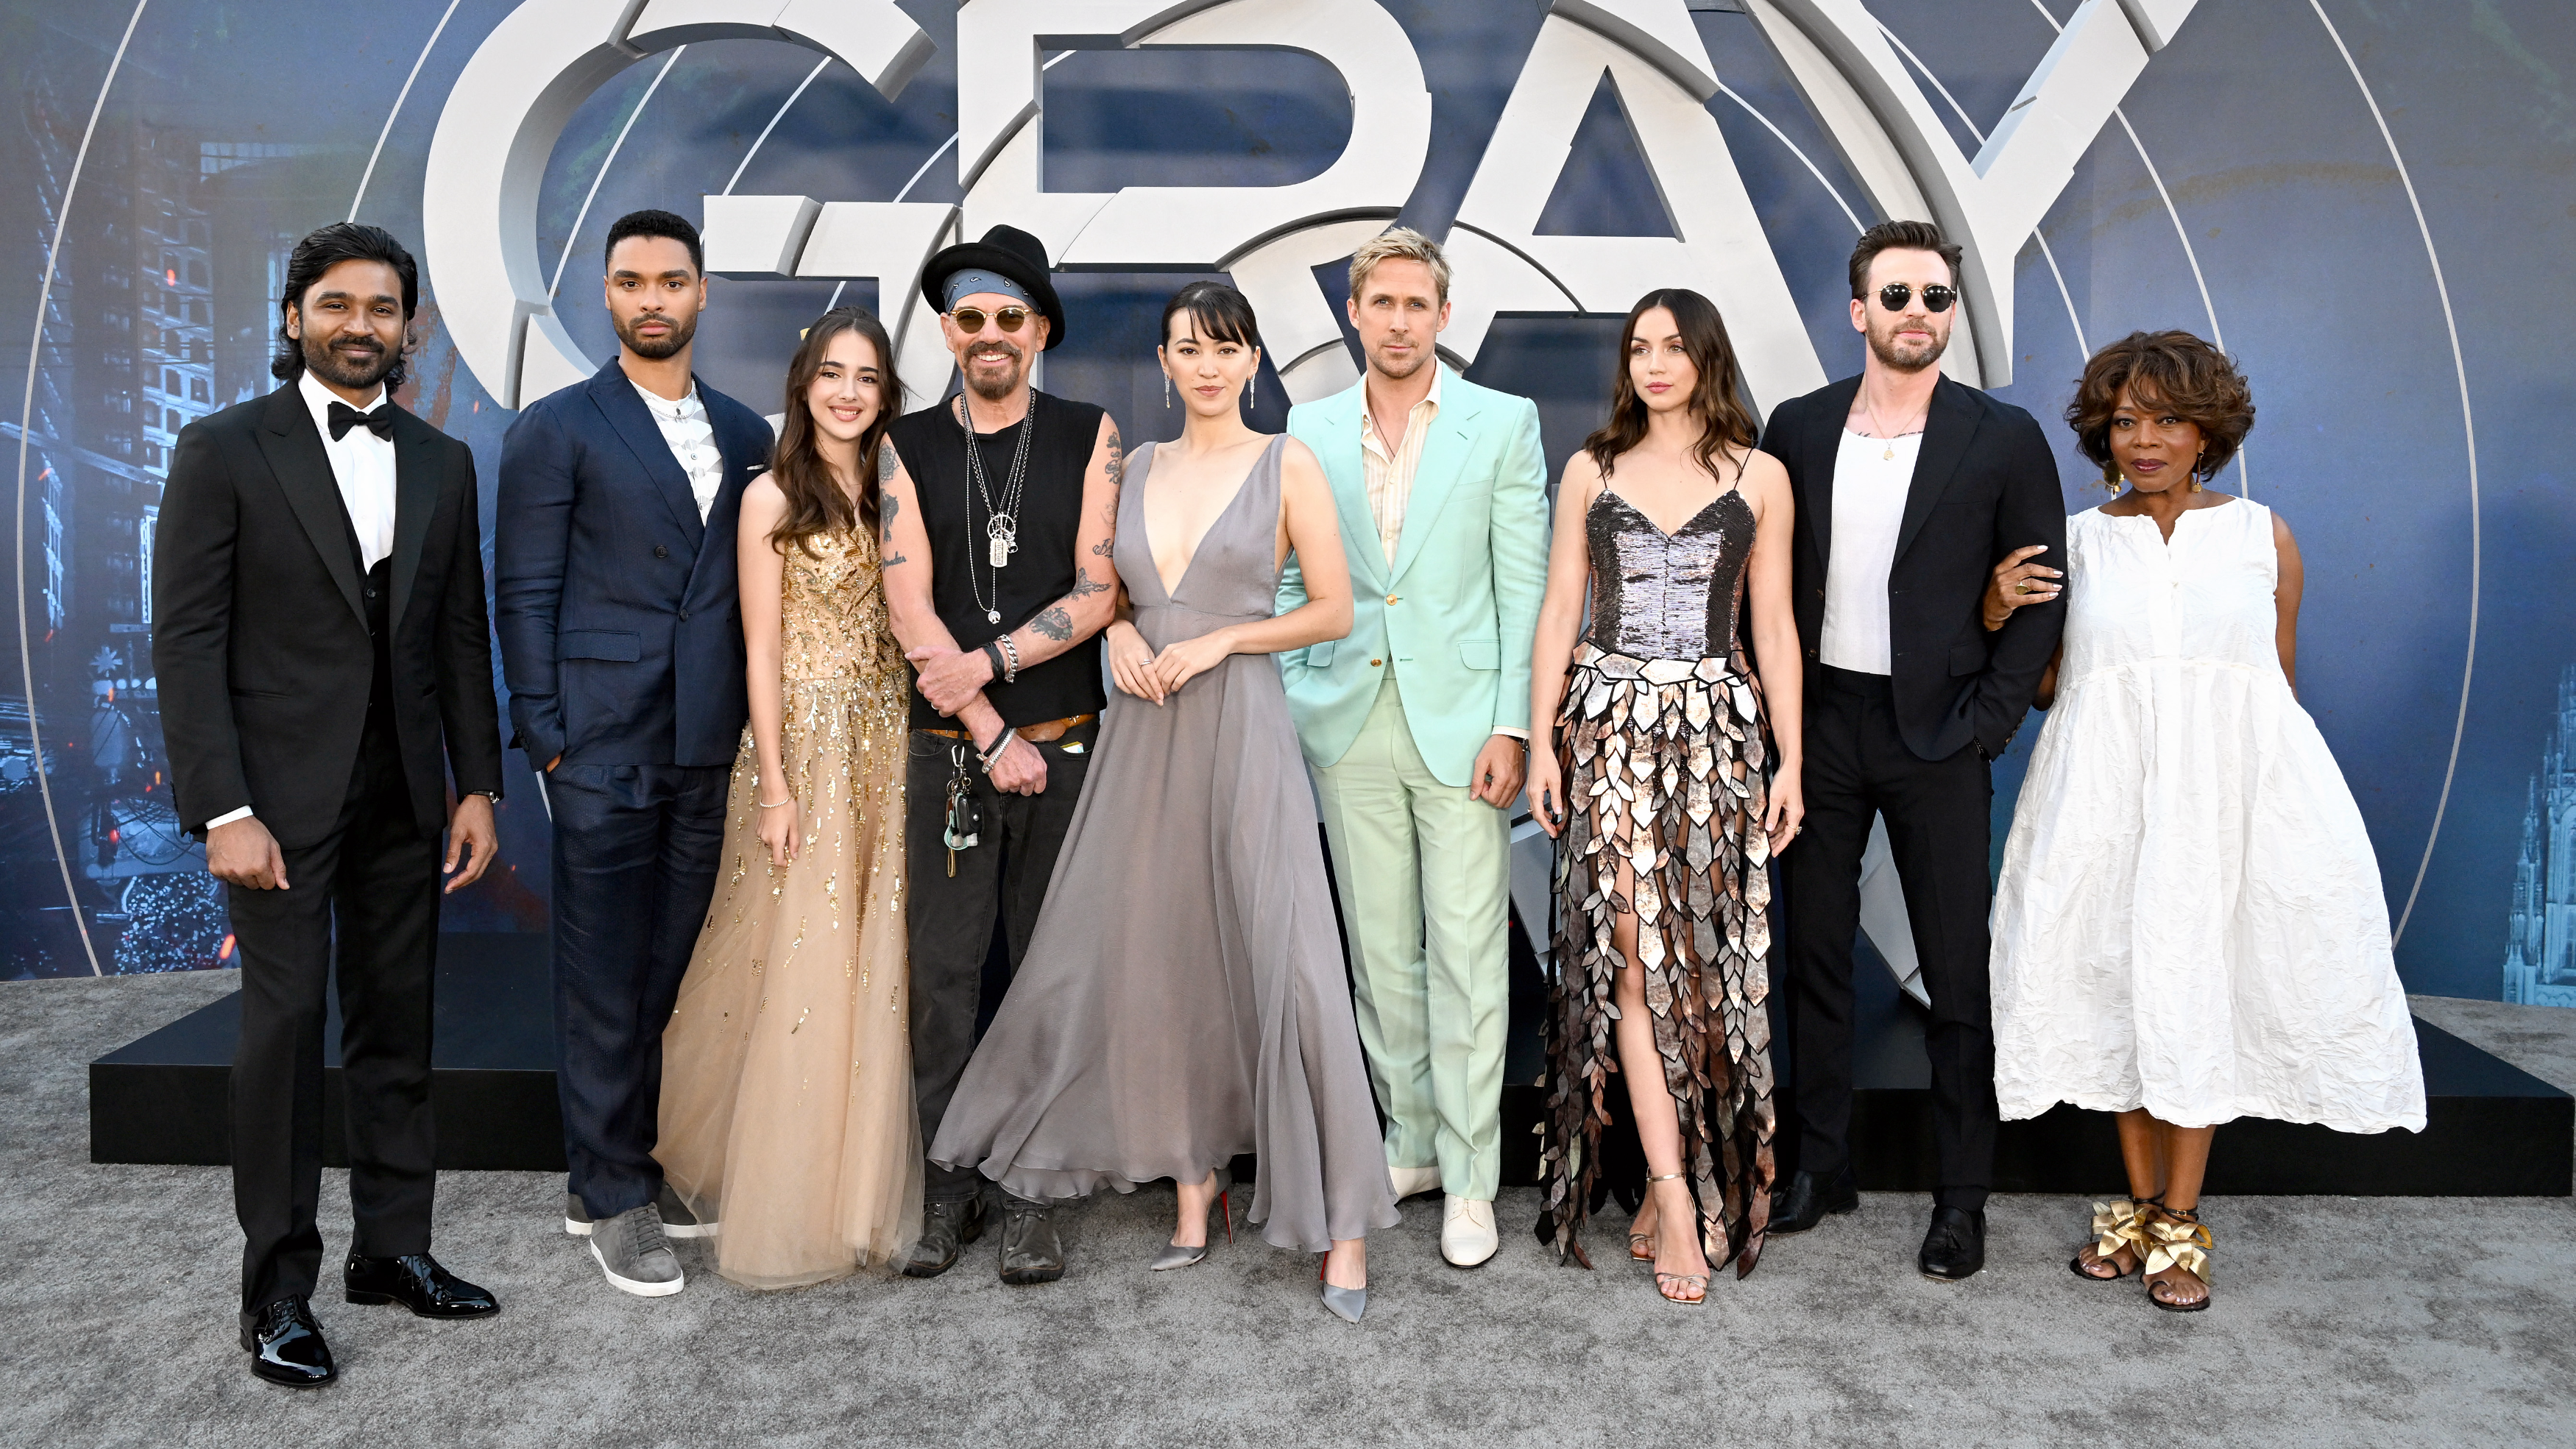 THE GRAY MAN 2 Teaser (2023) With Ryan Gosling & Ana De Armas 